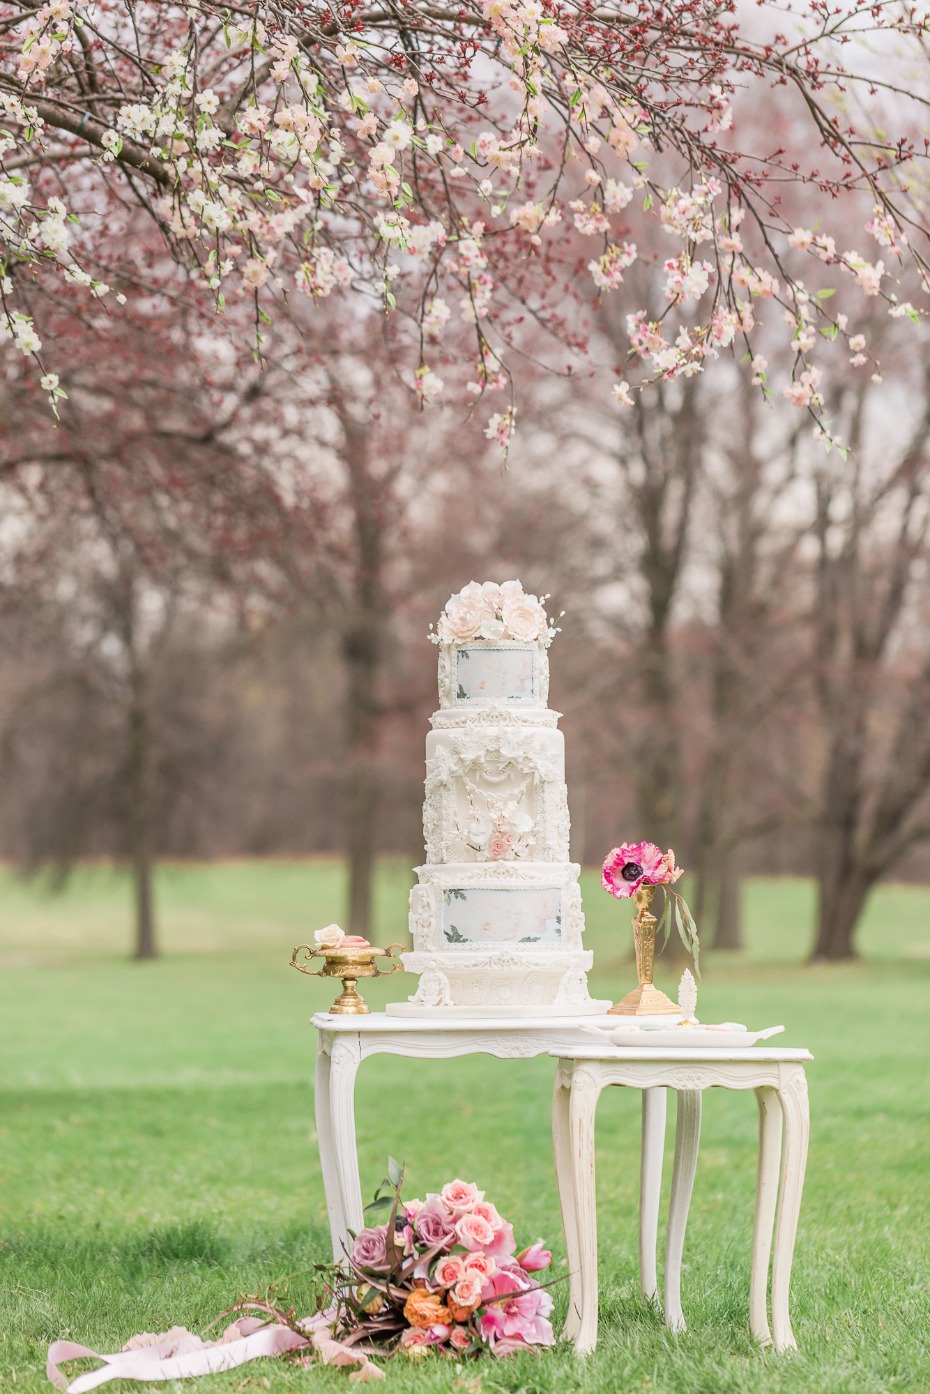 Intricate white wedding cake